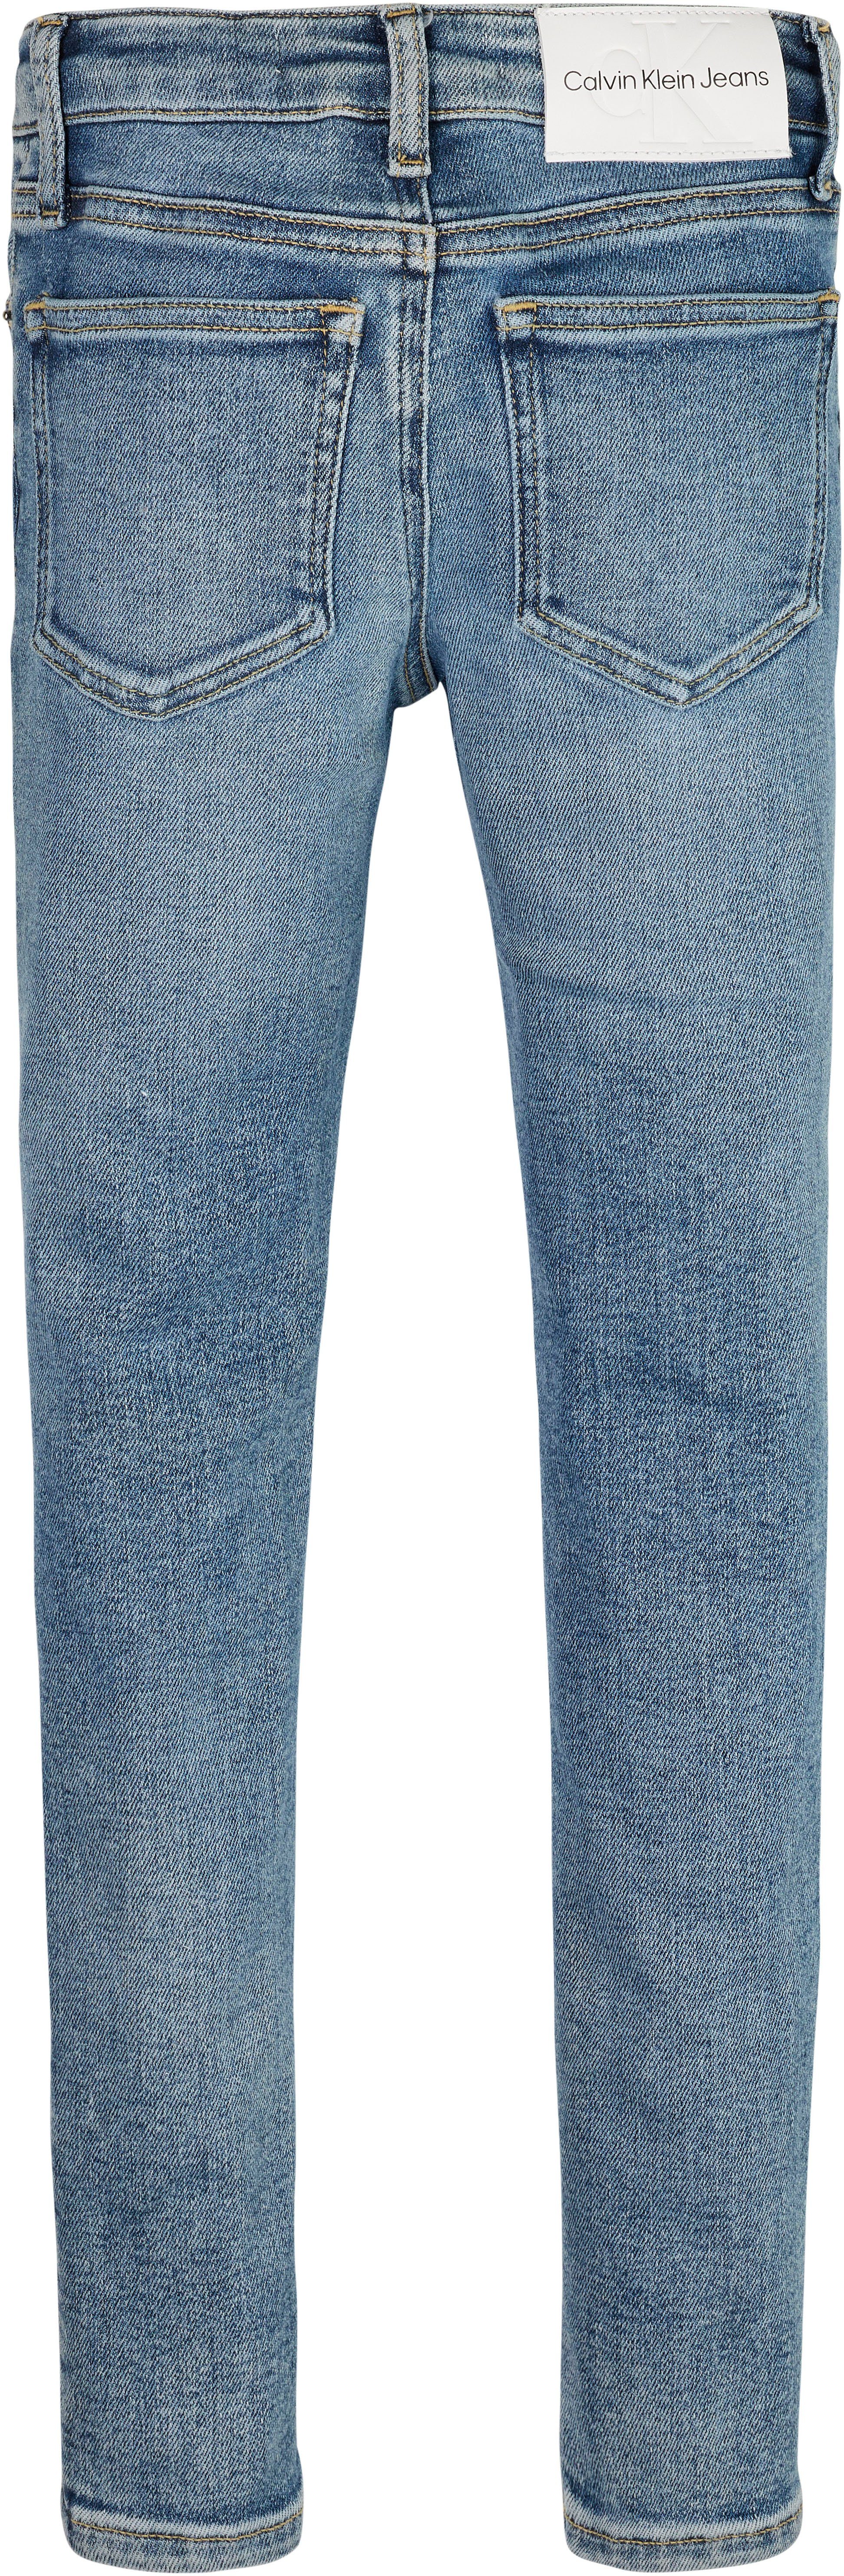 Calvin Klein Jeans Stretch-Jeans BLUE SNAKE SKINNY LIGHT MR